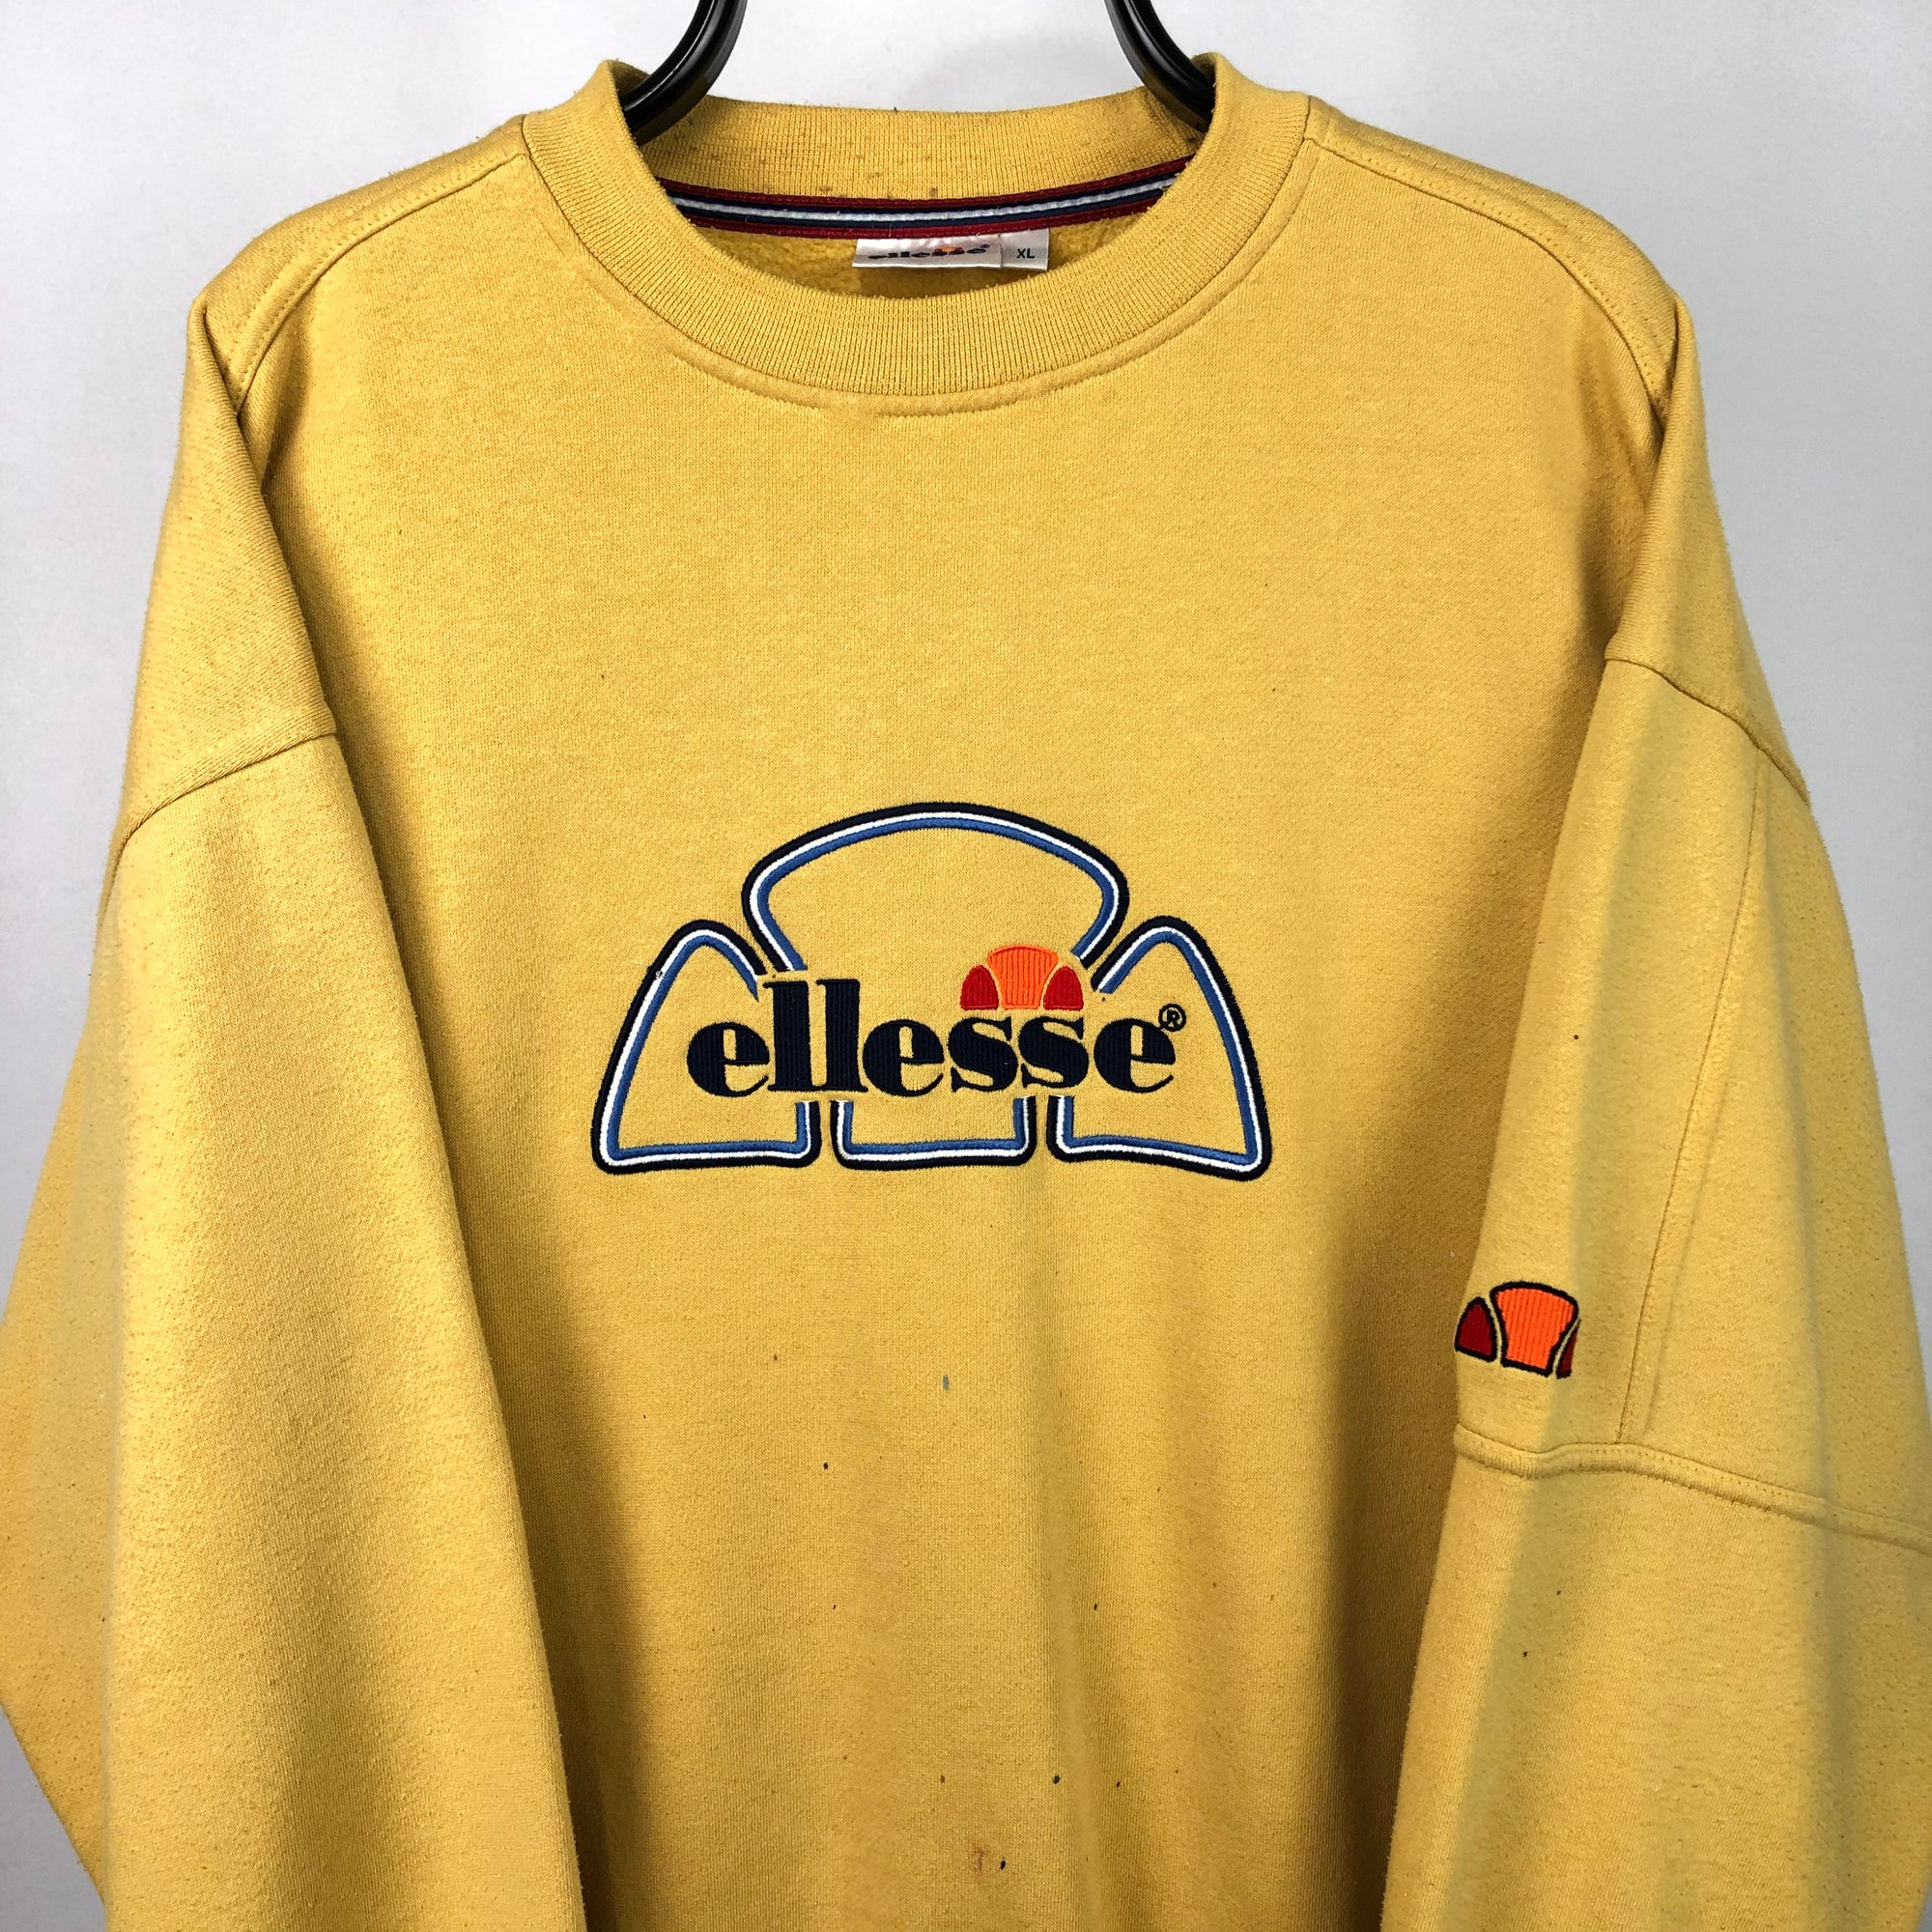 Vintage 90s Ellesse Spellout Sweatshirt in Light Mustard - Men's XL/Women's XXL